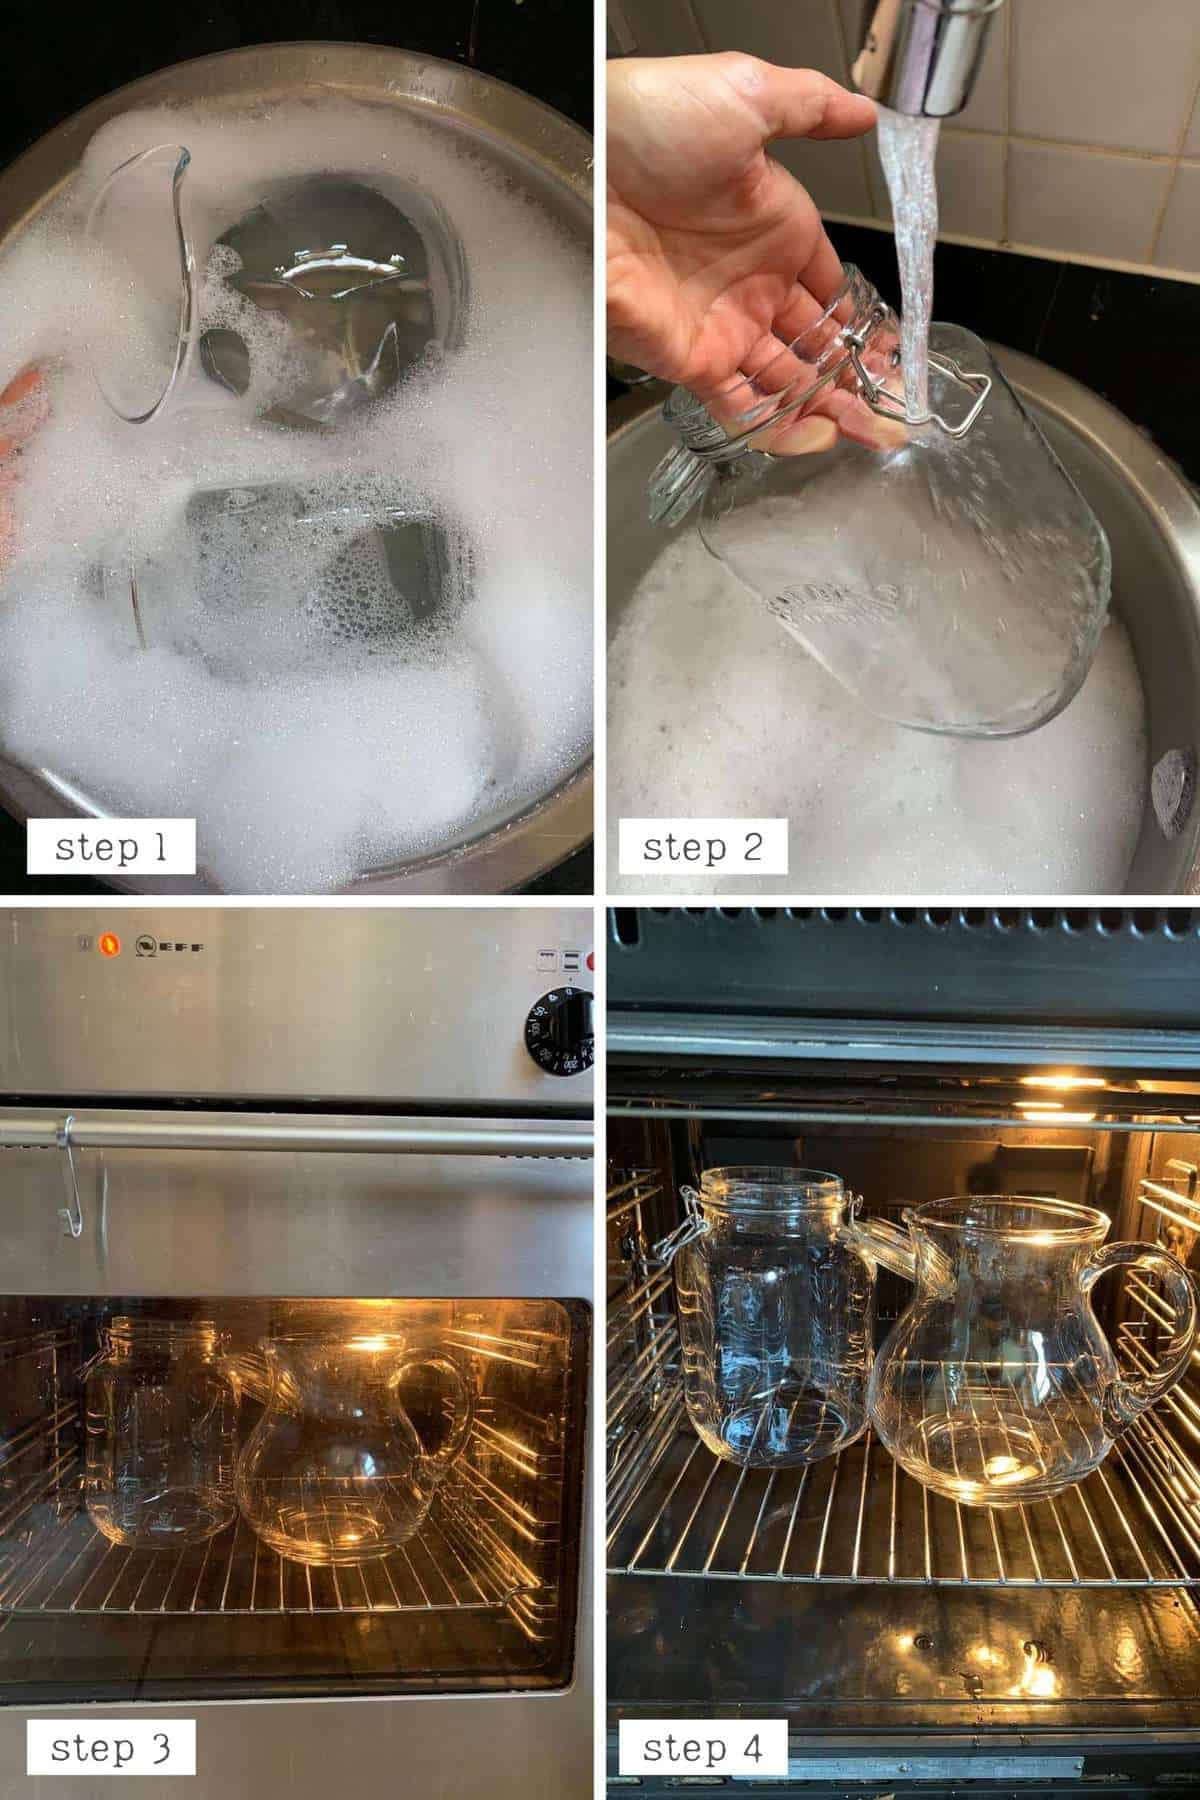 Sterilizing the tools for making Apple Cider Vinegar